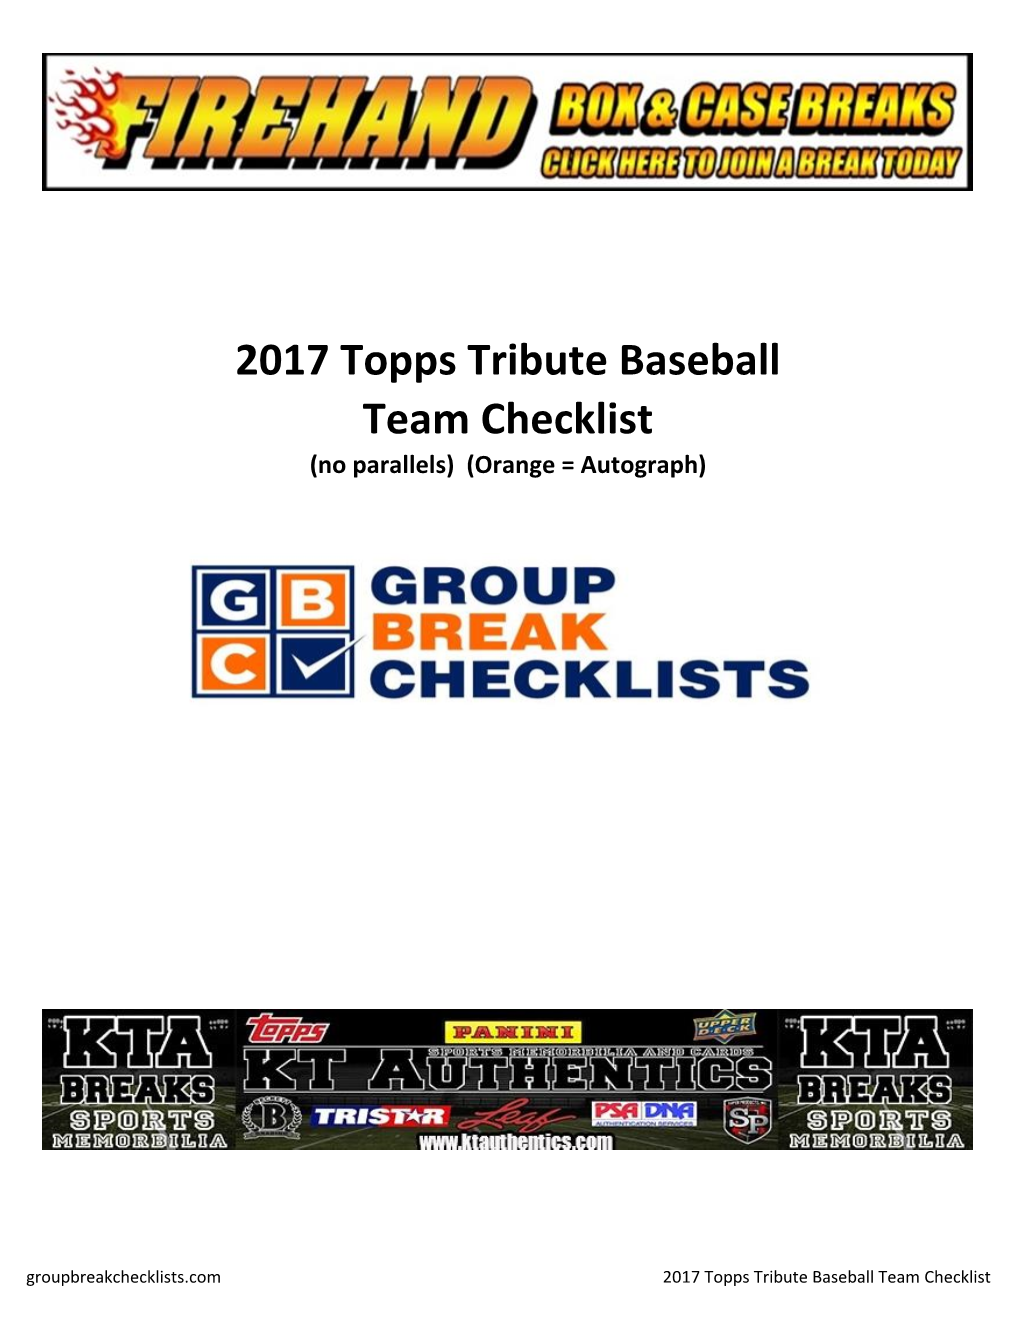 2017 Topps Tribute Baseball Team Checklist (No Parallels) (Orange = Autograph)